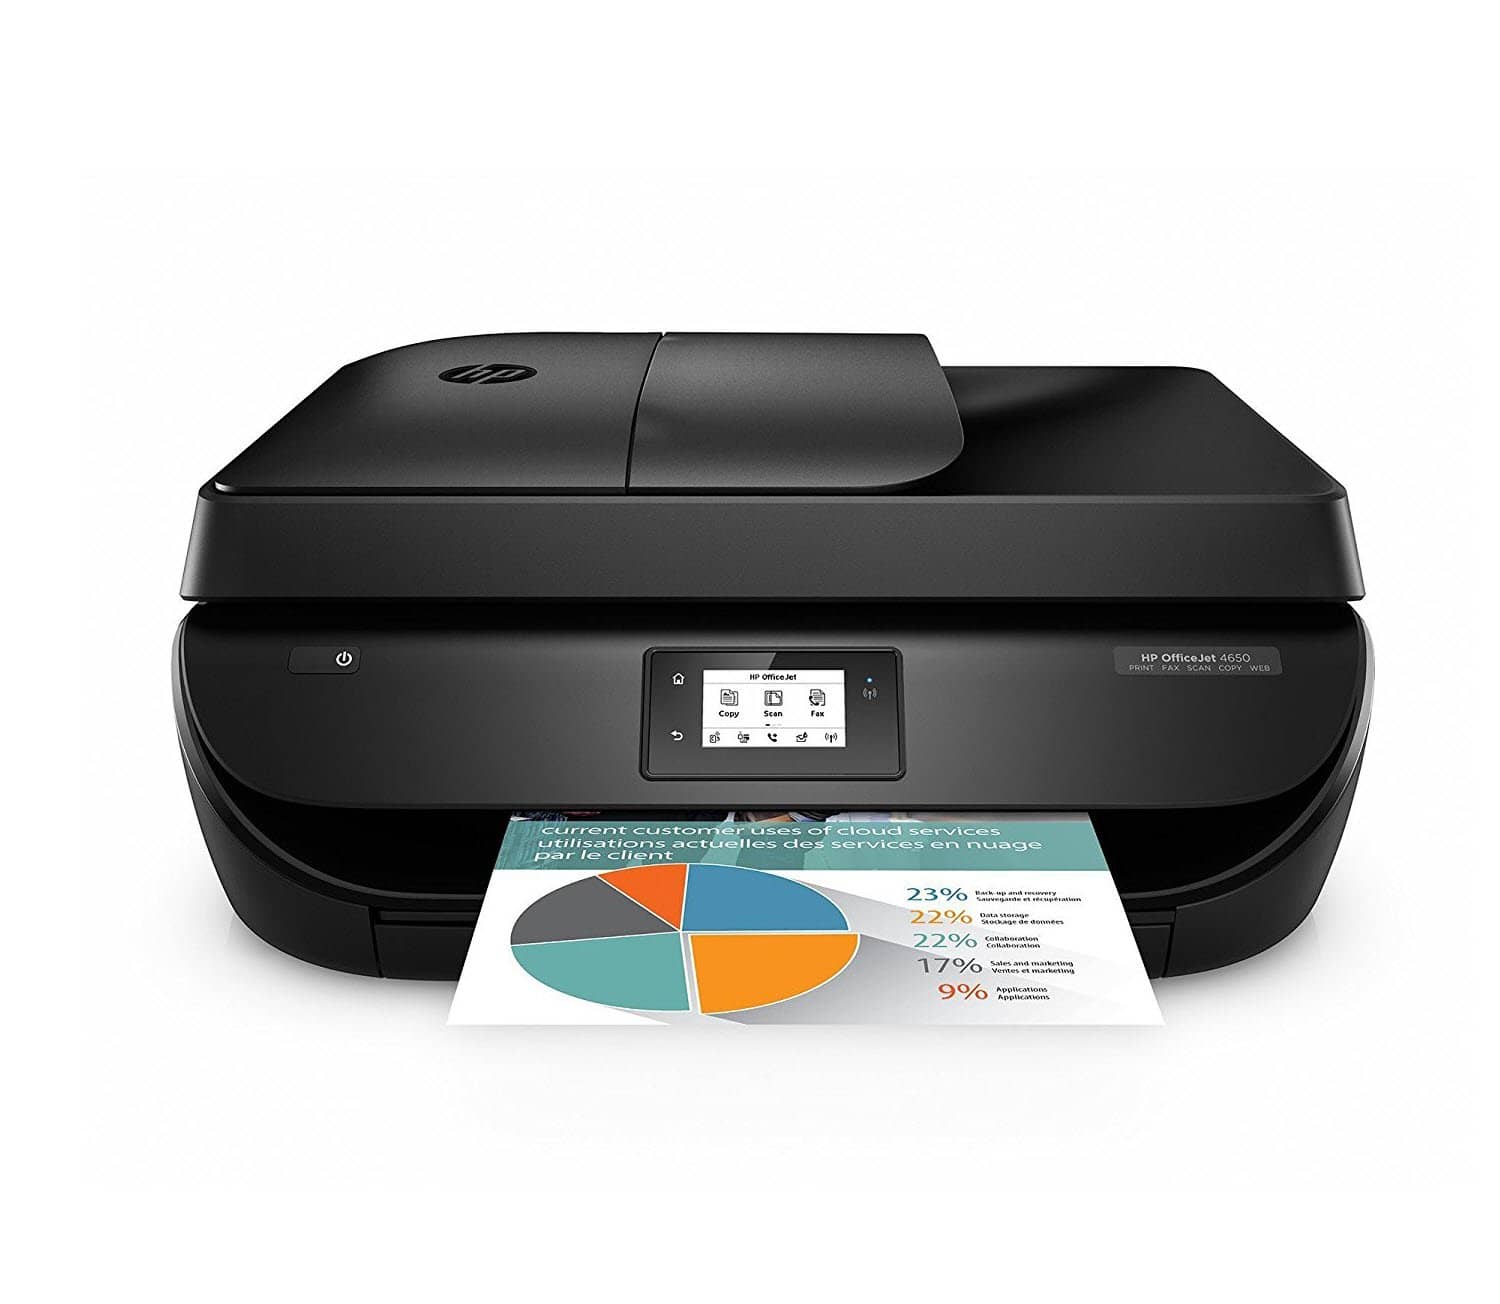 HP OfficeJet 4650 Printer and XL Ink Bundle